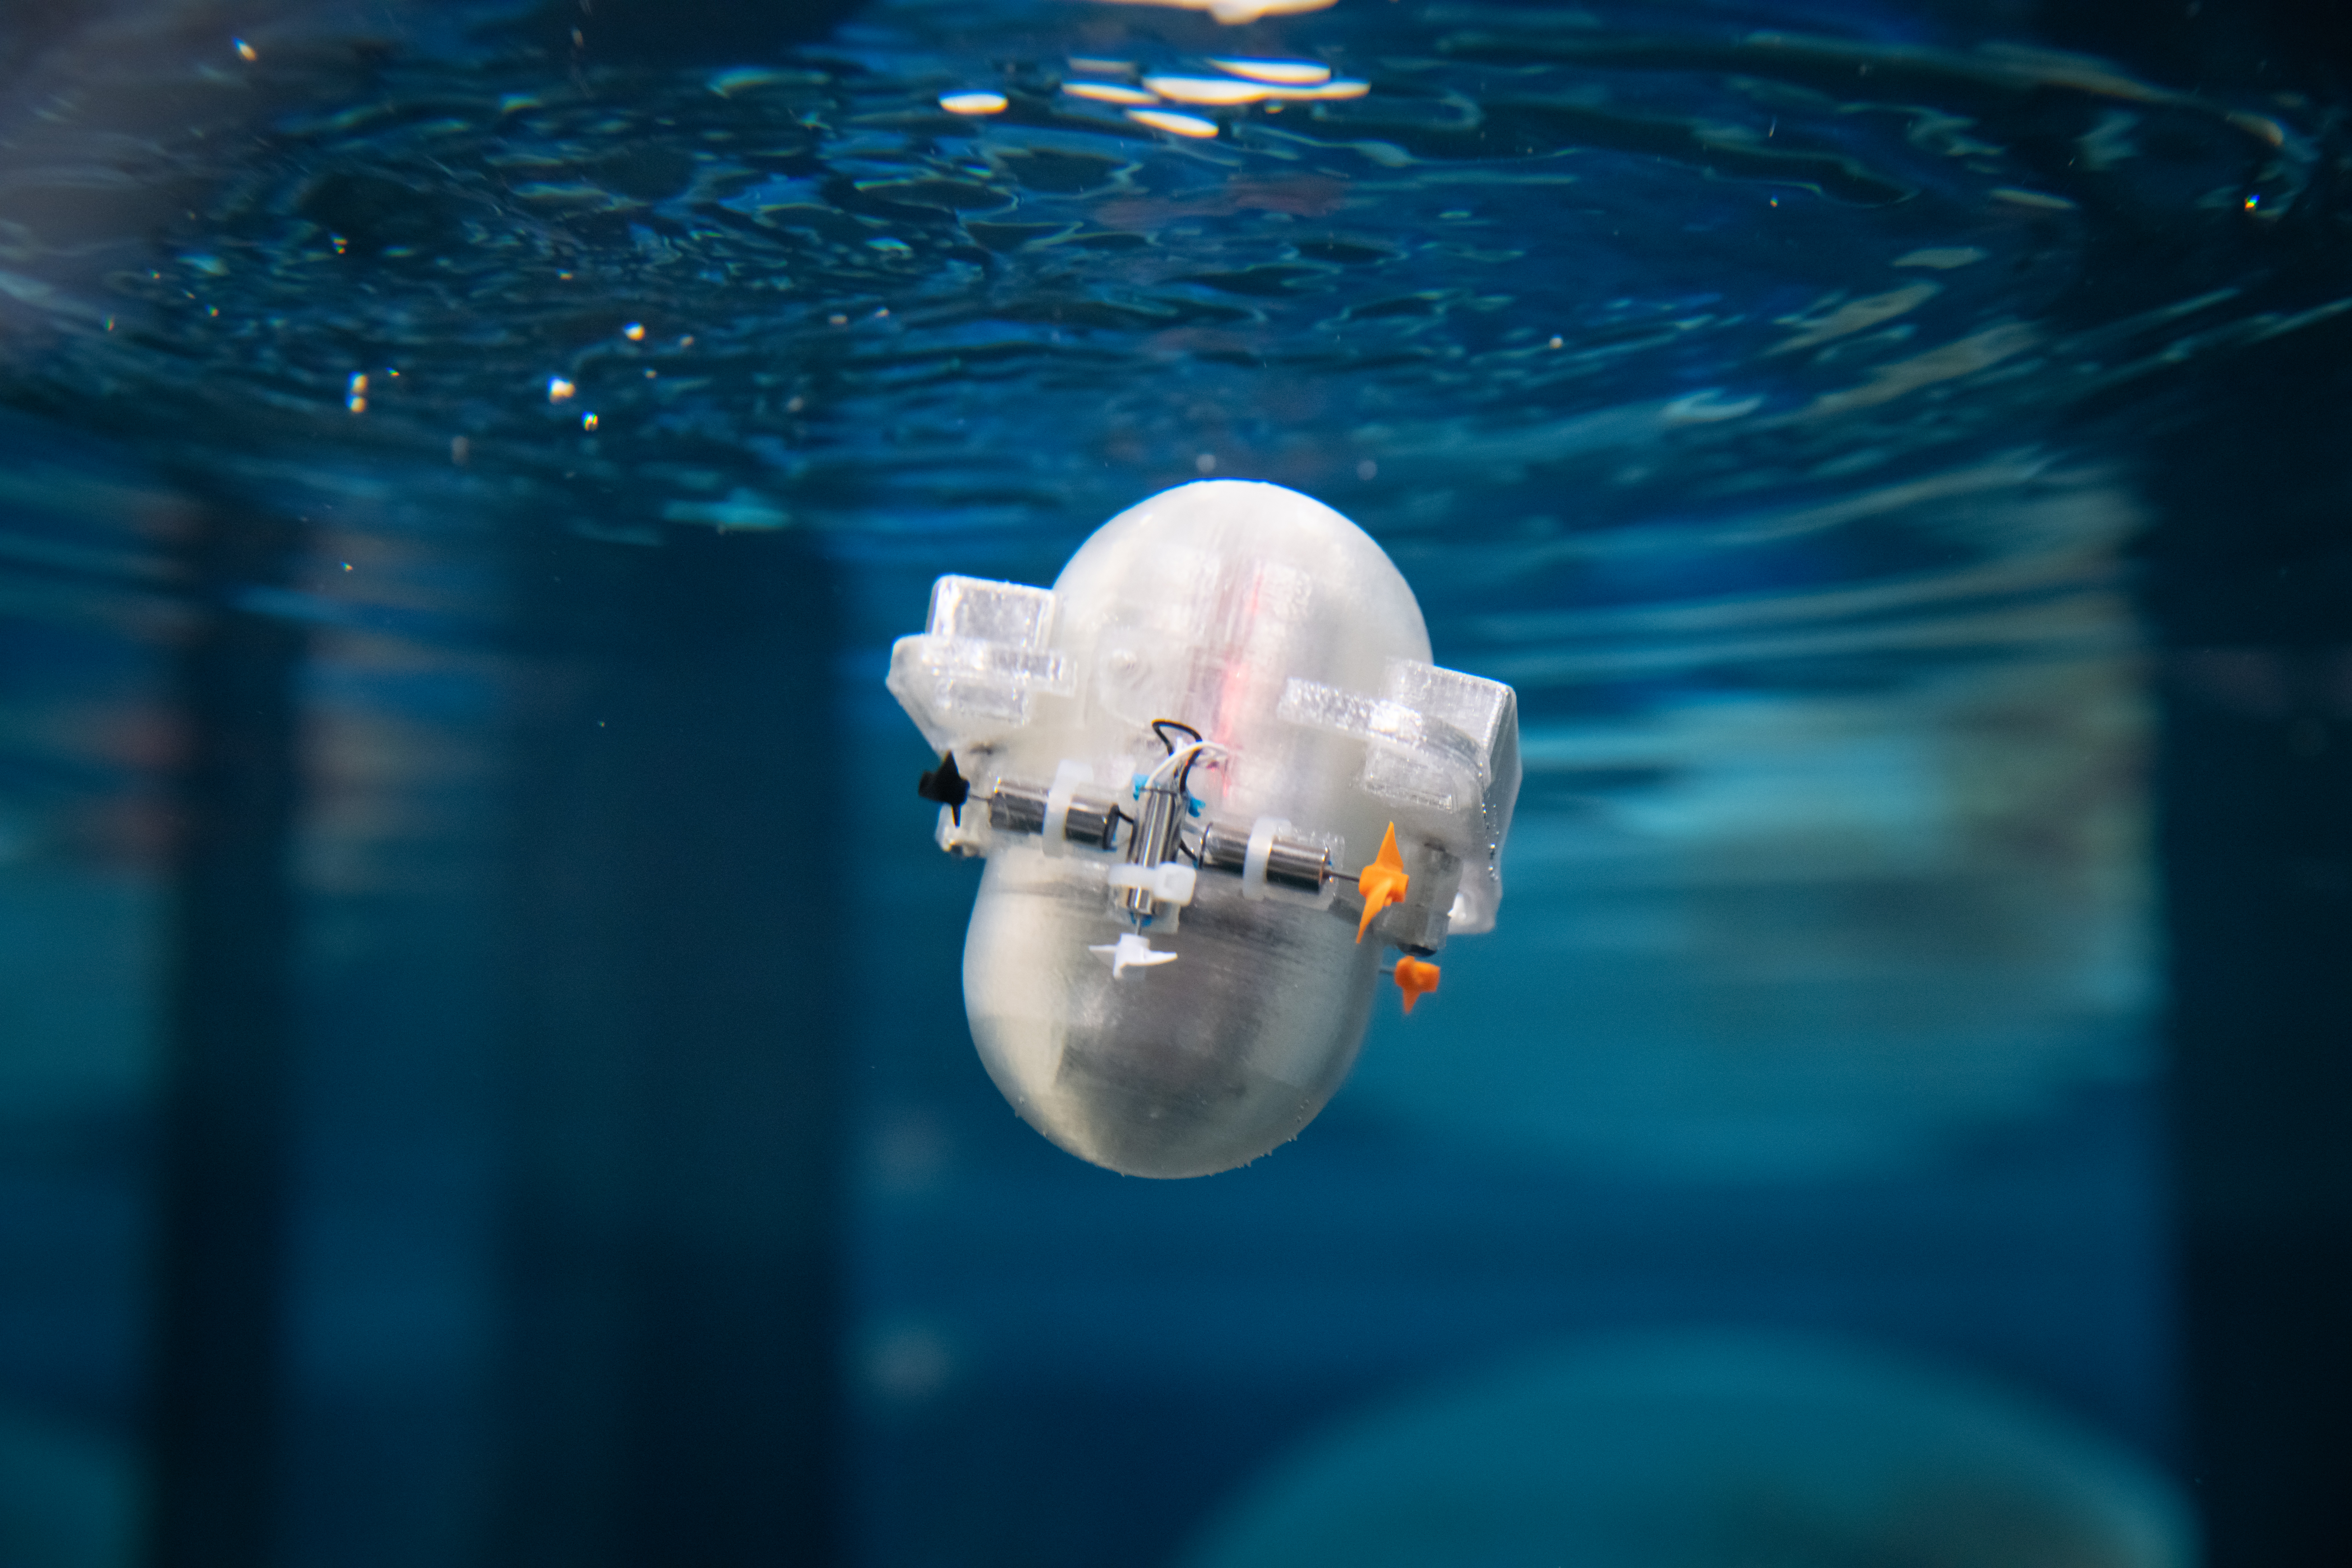 Caltech's aquatic robot uses AI to navigate the oceans